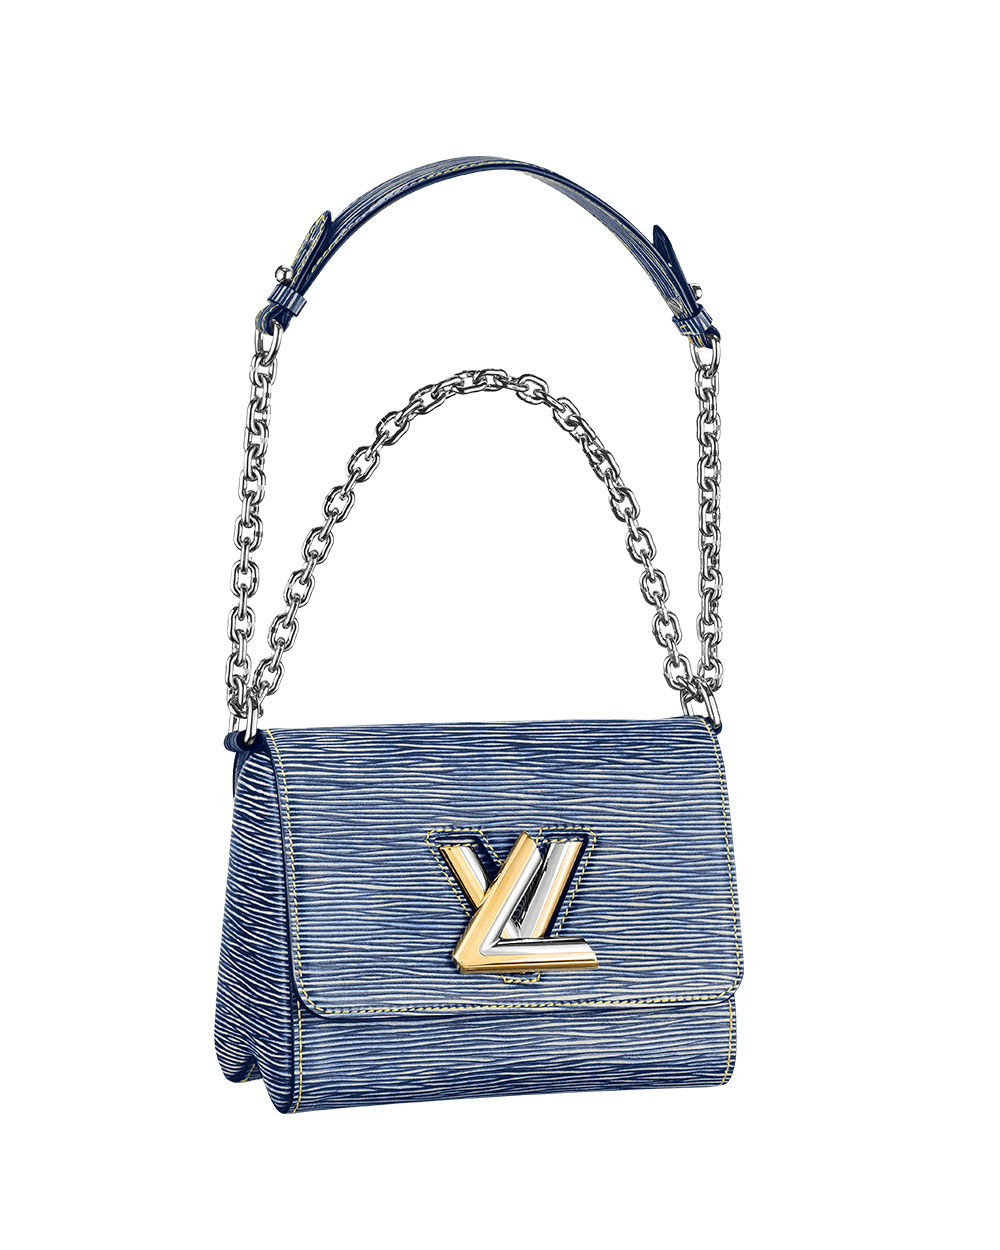 Louis Vuitton bag, $5,000. www.louisvuitton.com